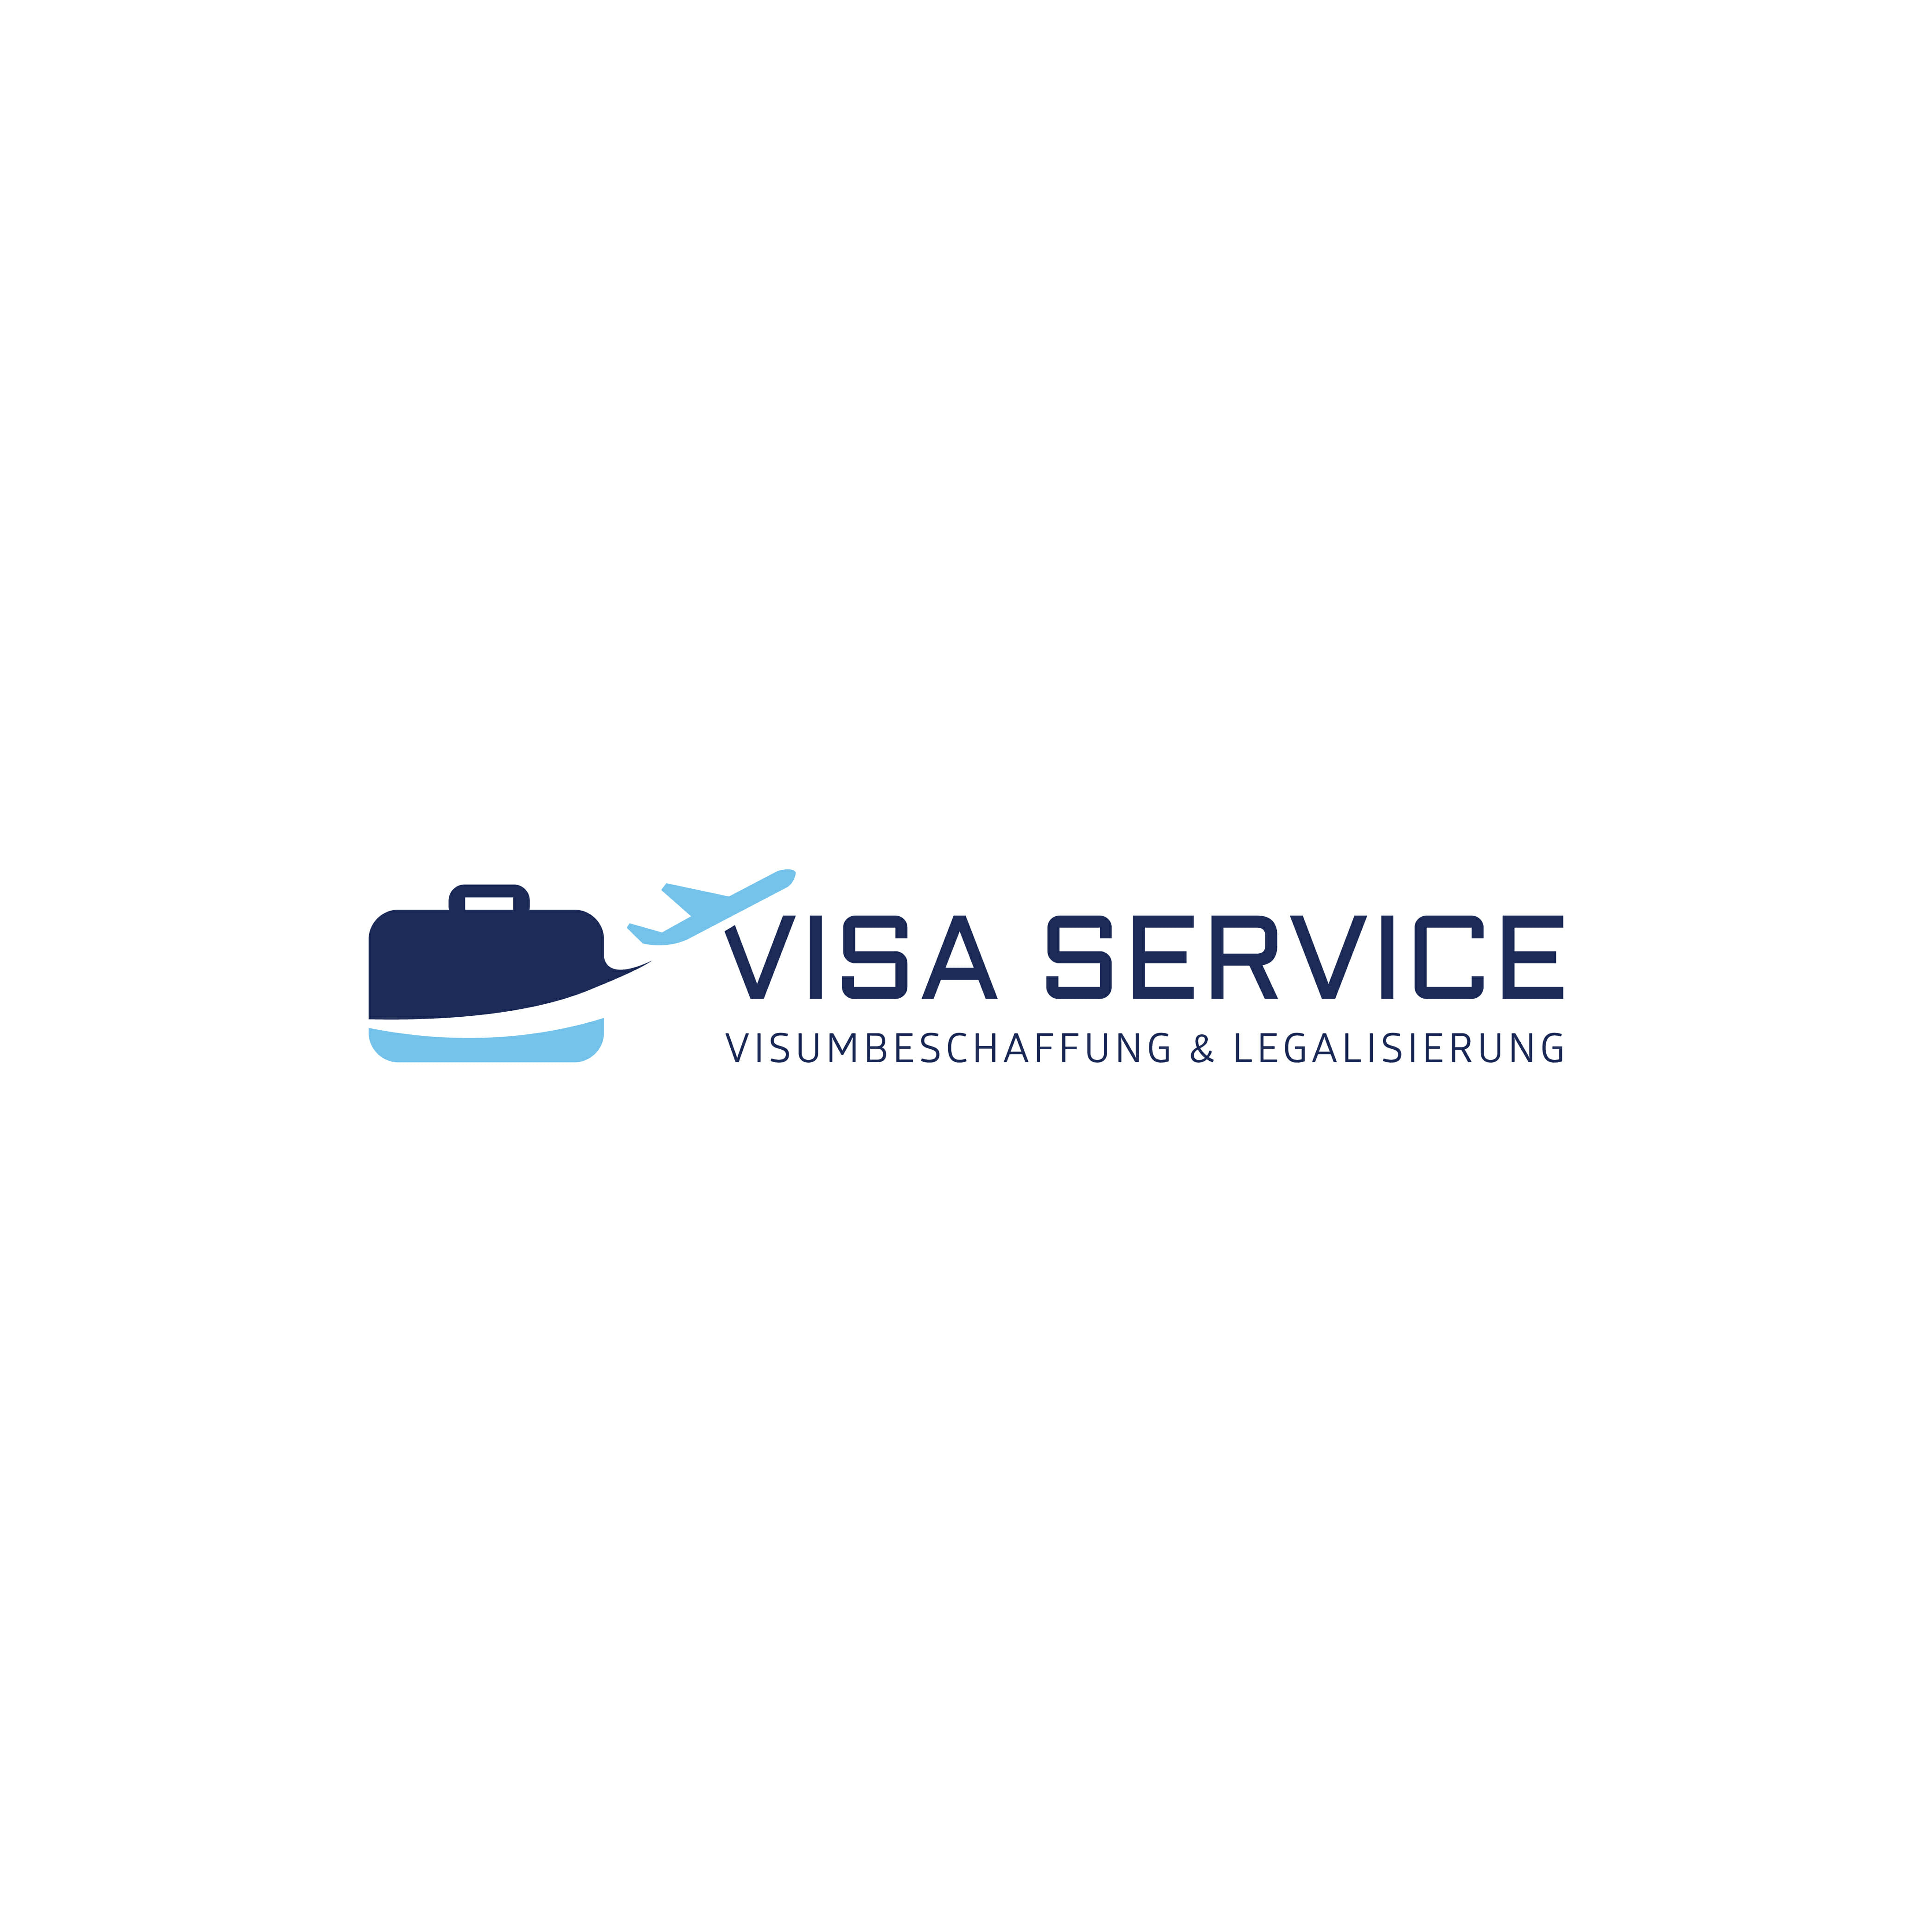 Visa обслуживание. Visa service. Visa service логотип. Relocation m service visa.